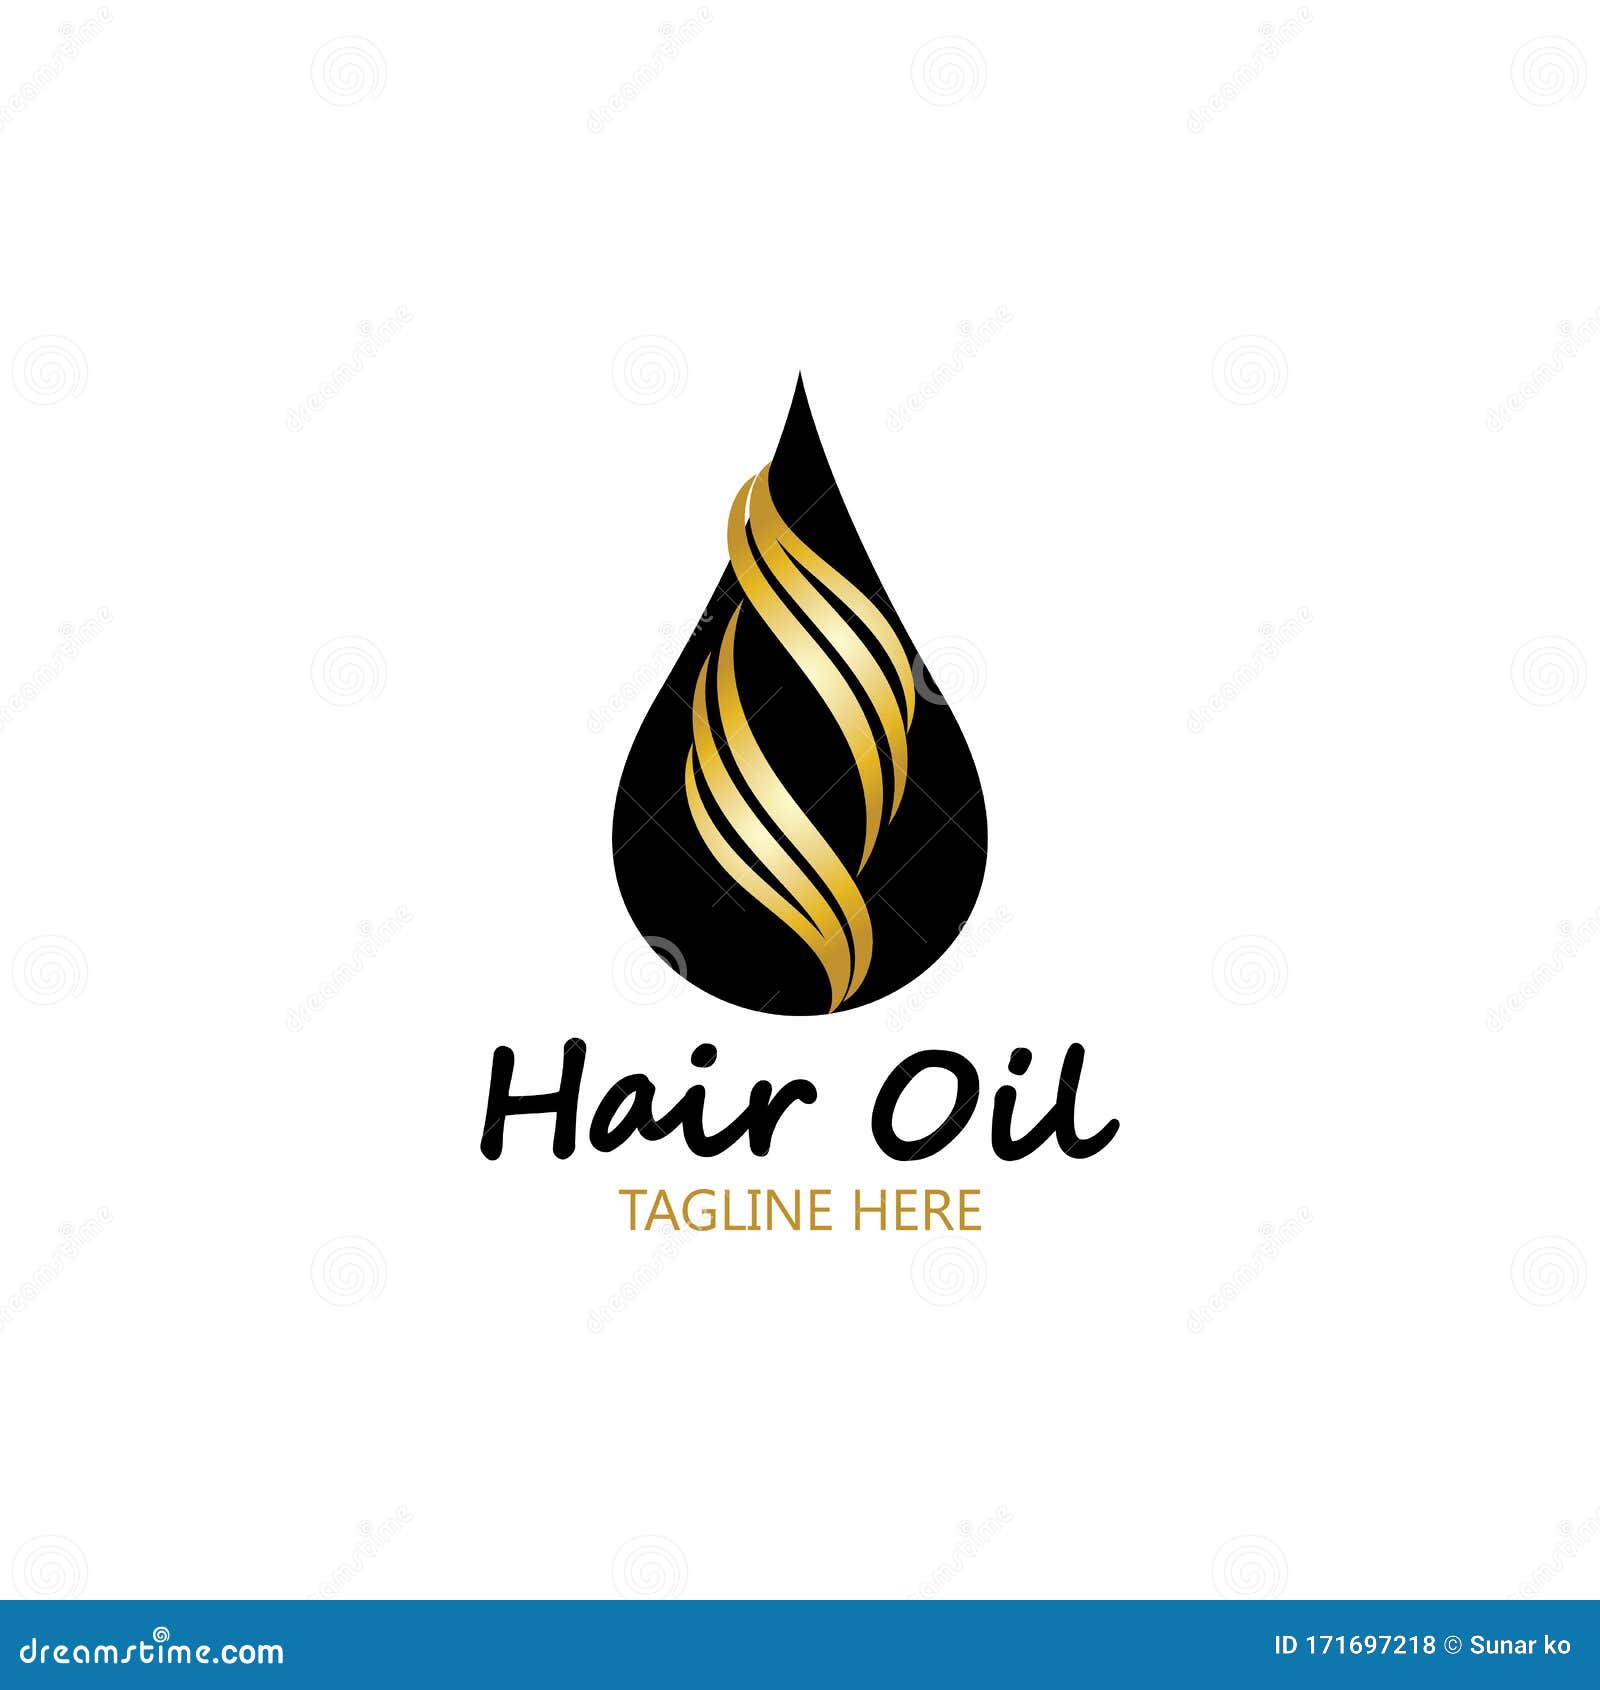 Design a logo for hair growth  scalp oil  Logo design contest  99designs